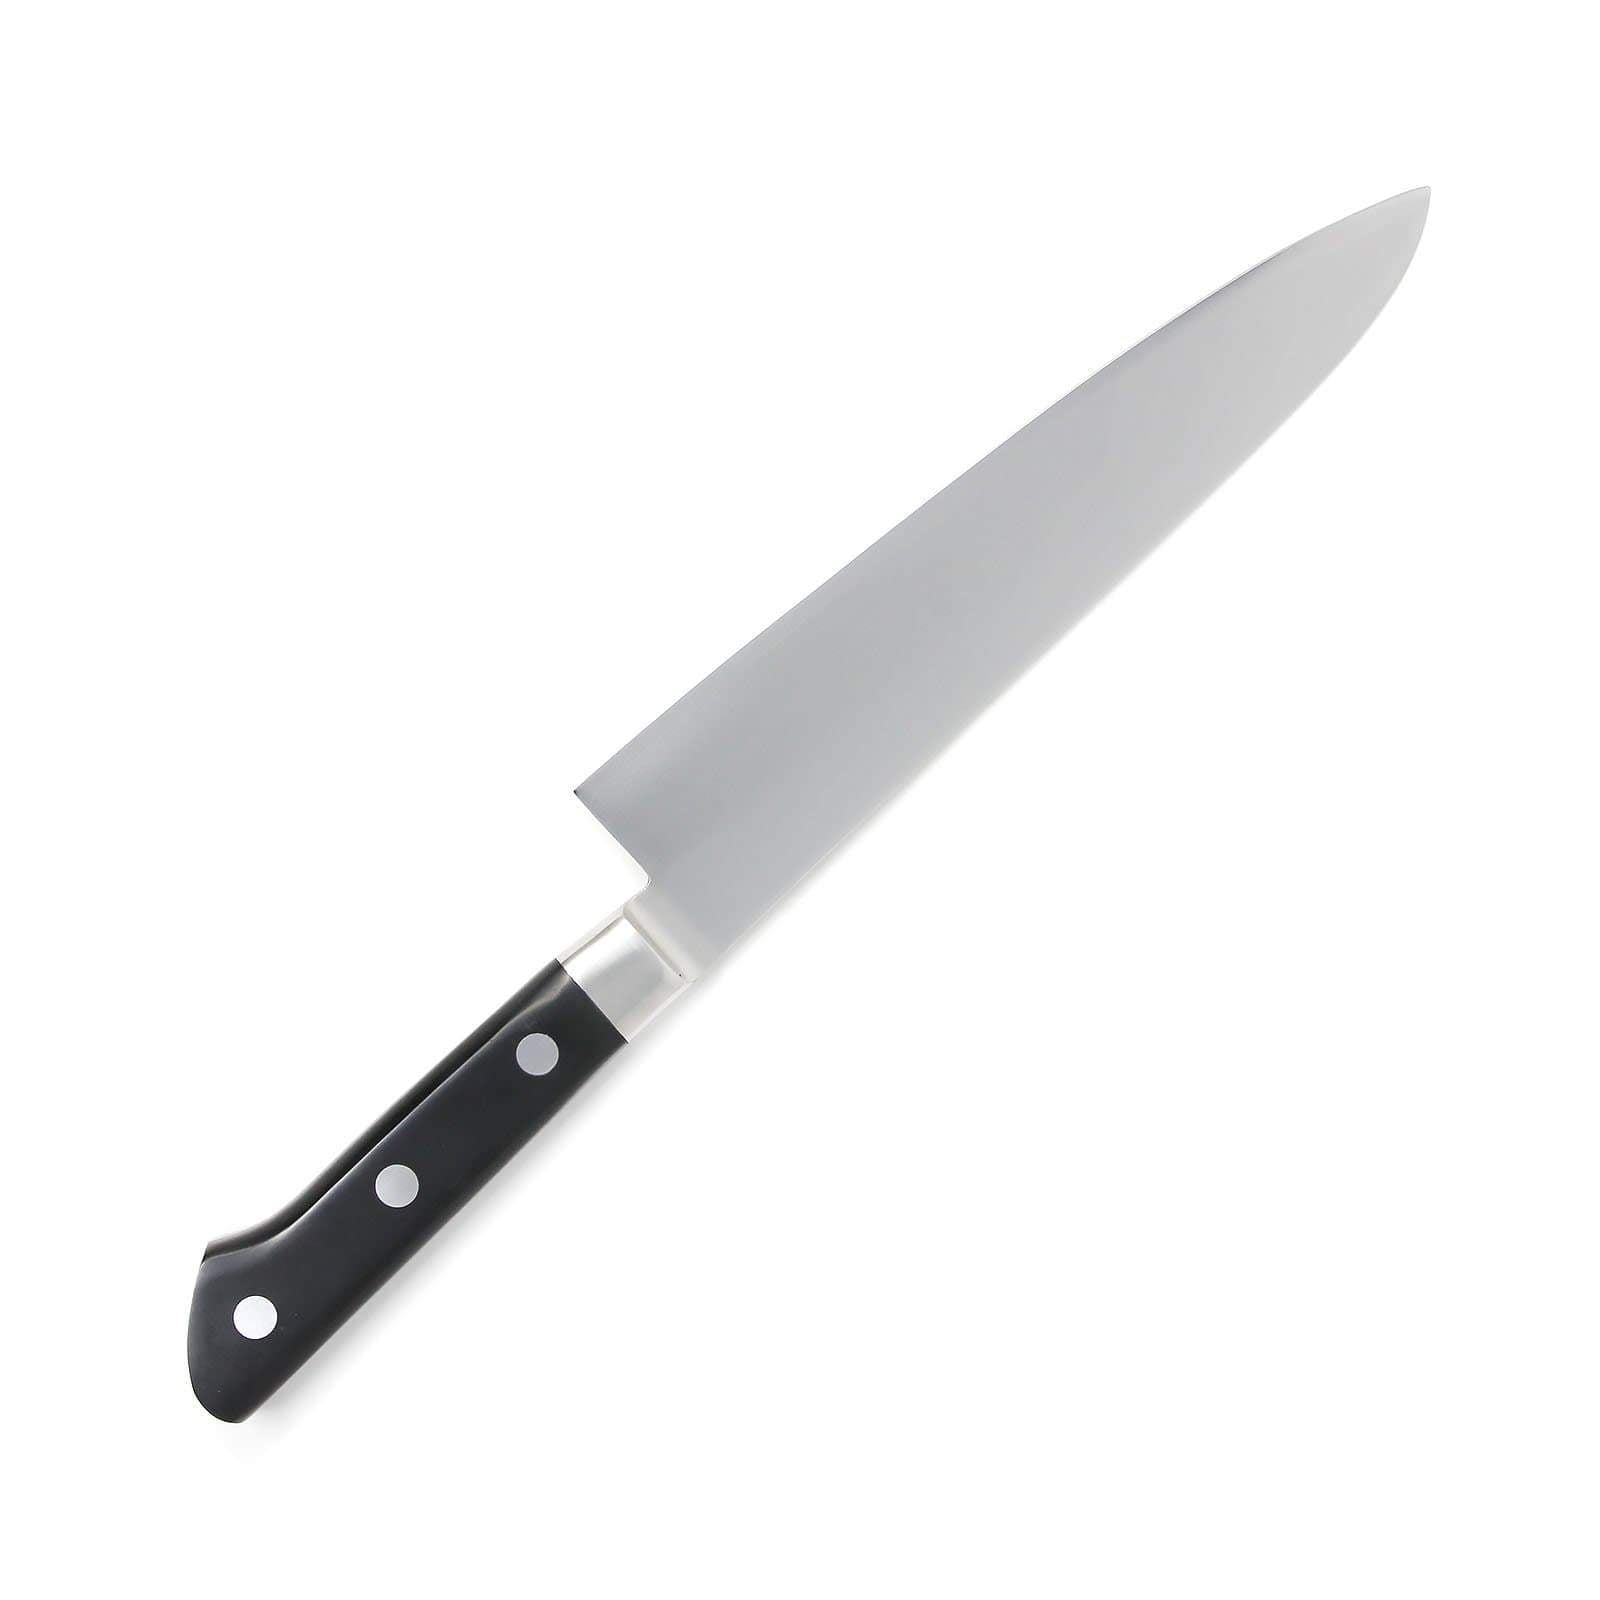 https://cdn.shopify.com/s/files/1/1610/3863/products/tojiro-fujitora-dp-3-layer-gyuto-knife-gyuto-knives-7666956795987_2000x.jpg?v=1563996422